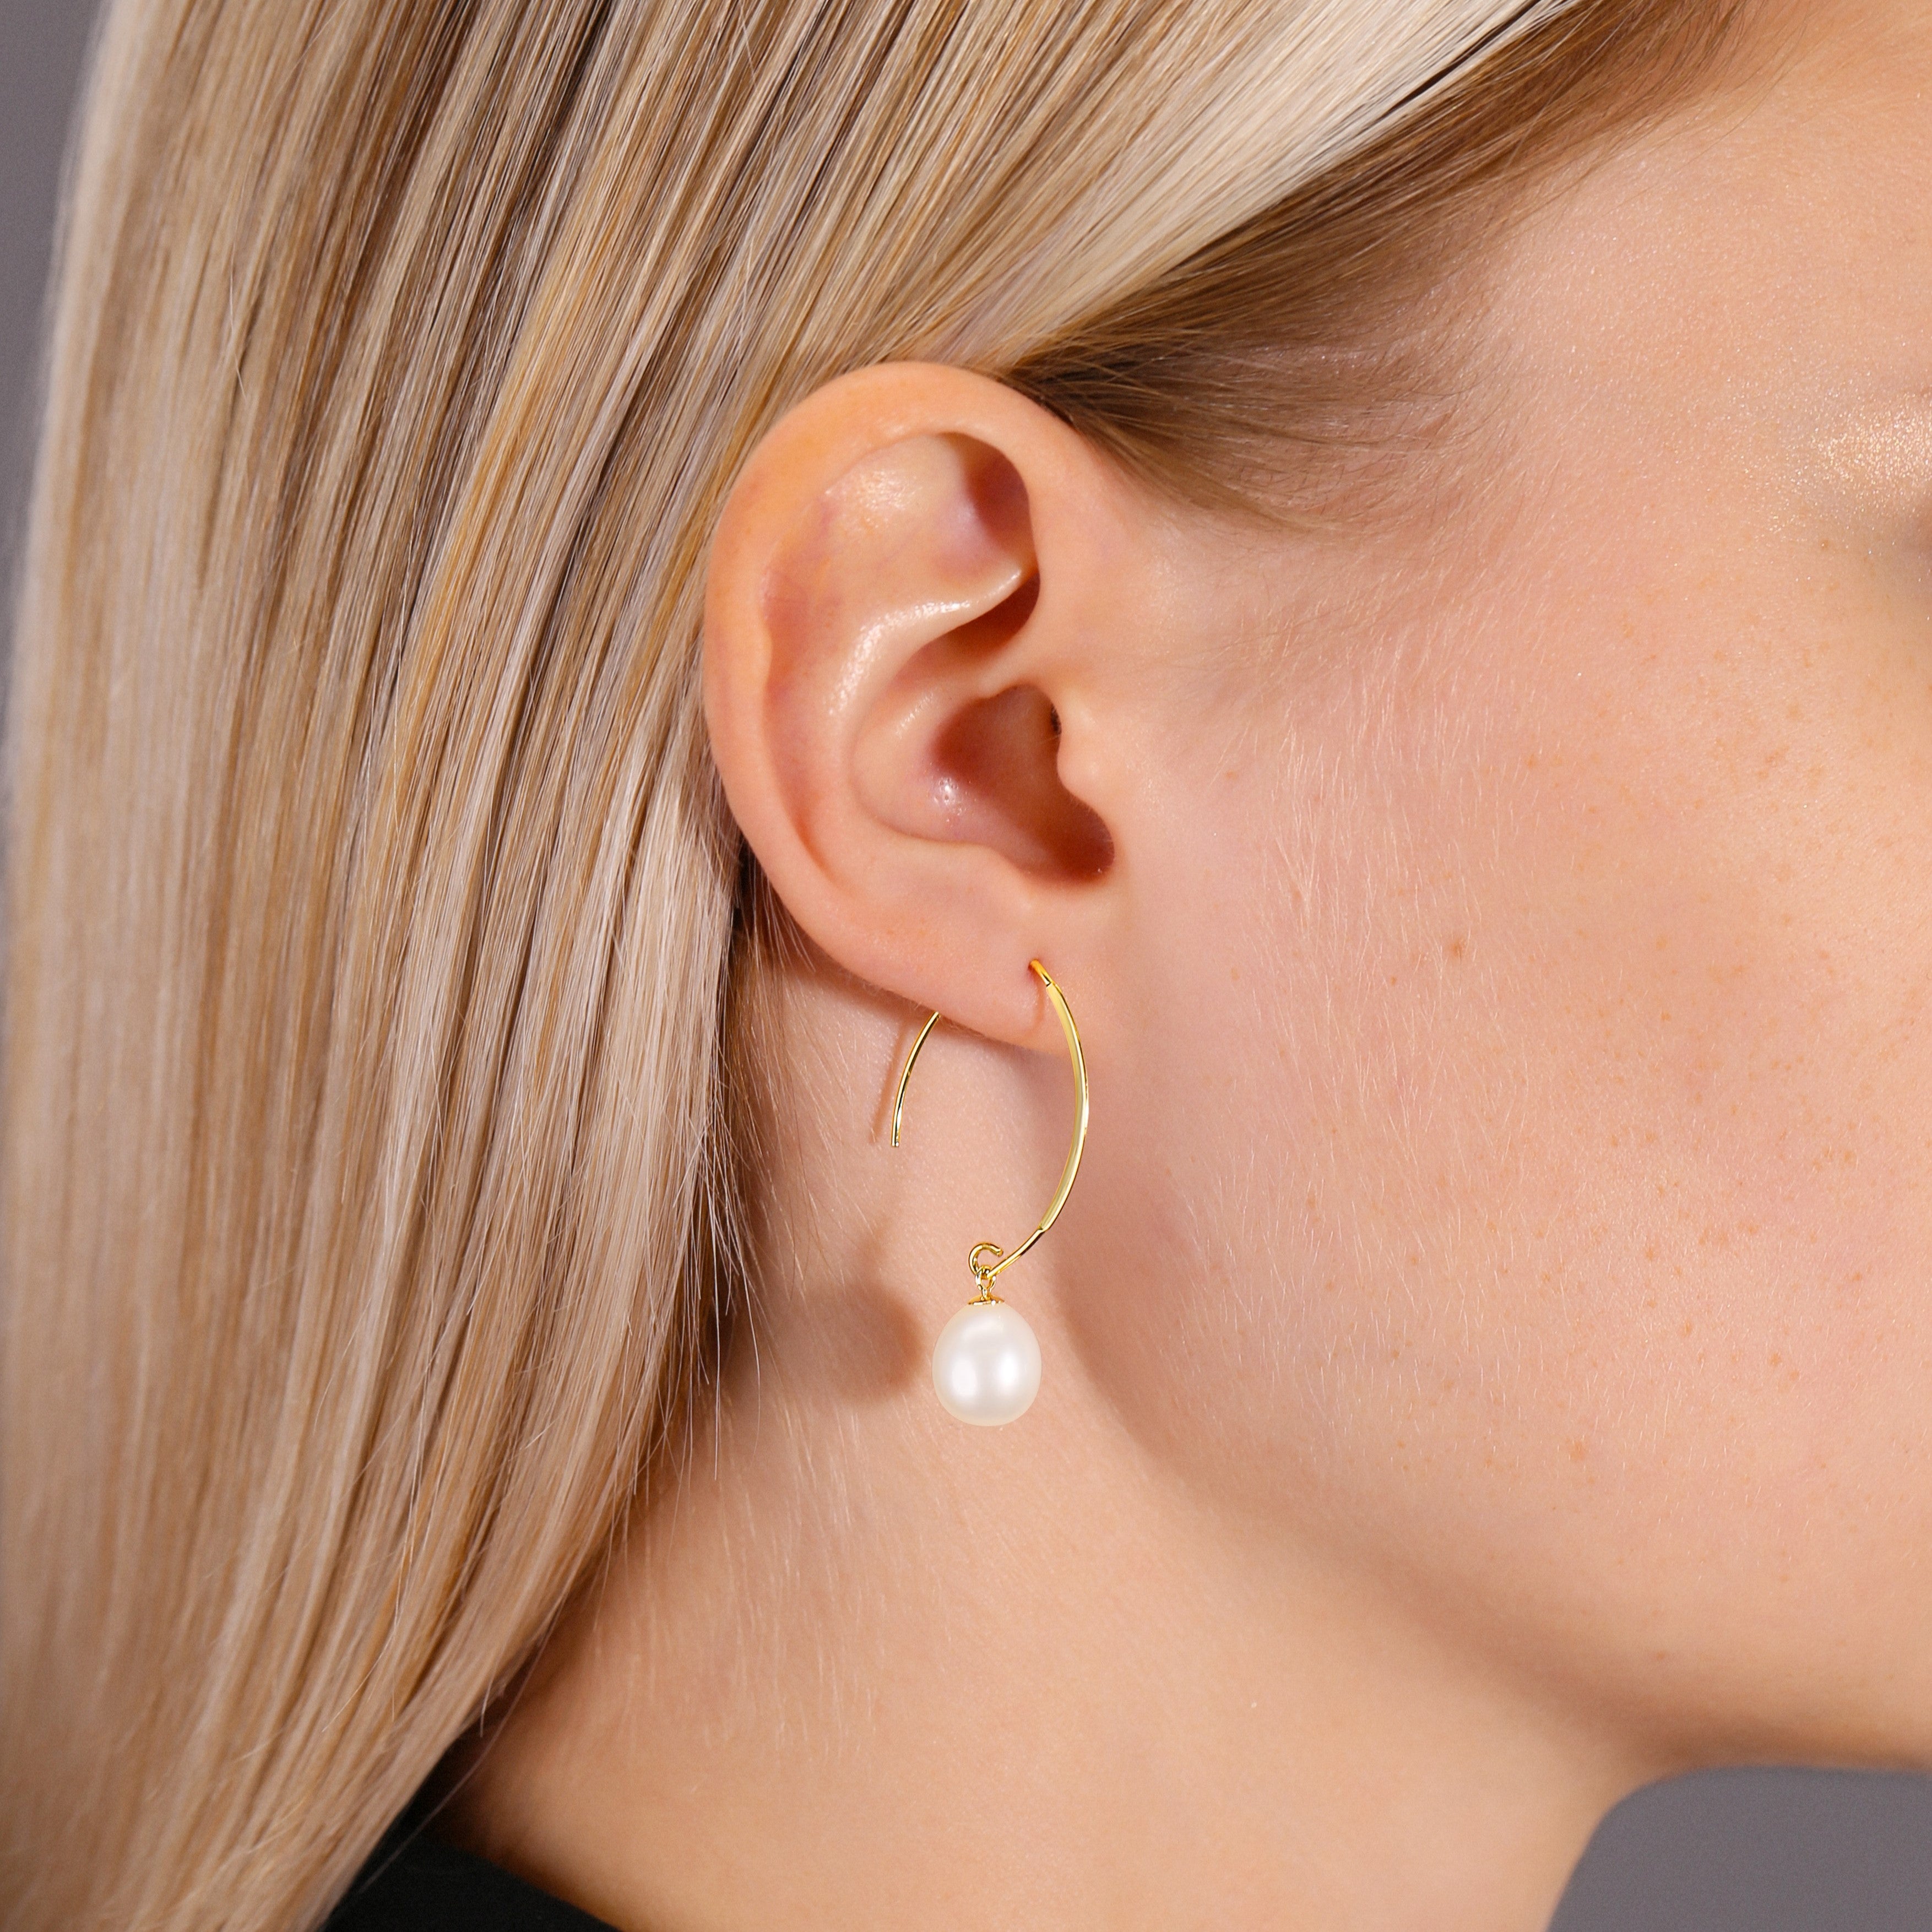 Diamond Cut Filigree Design Teardrop Earring in 14K Yellow Gold - Sam's Club